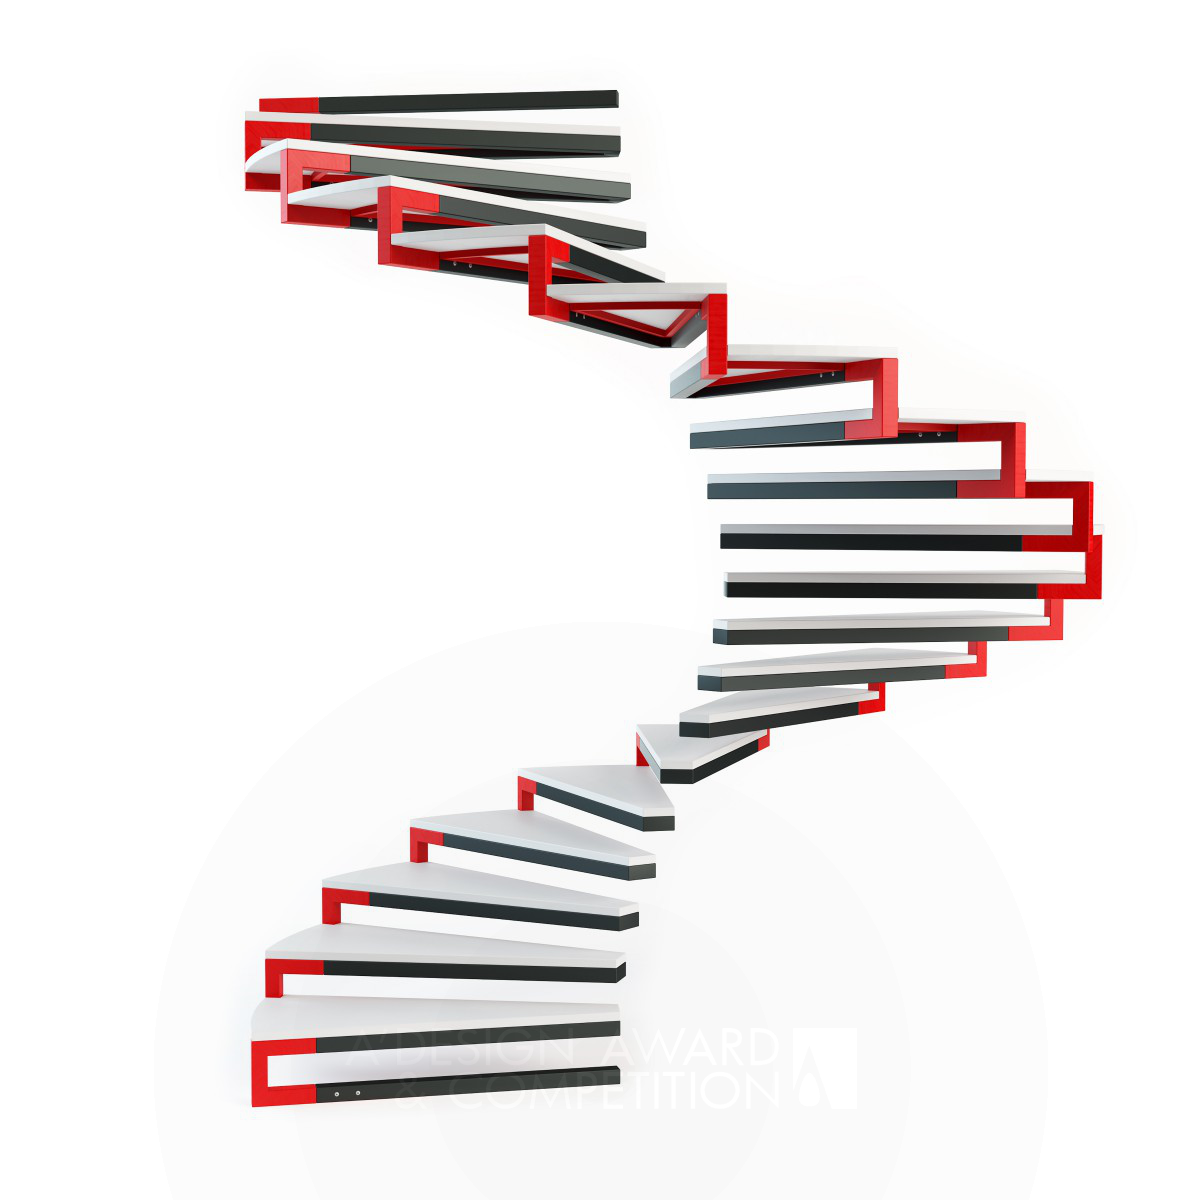 UVine: Revolutionizing Spiral Staircase Design